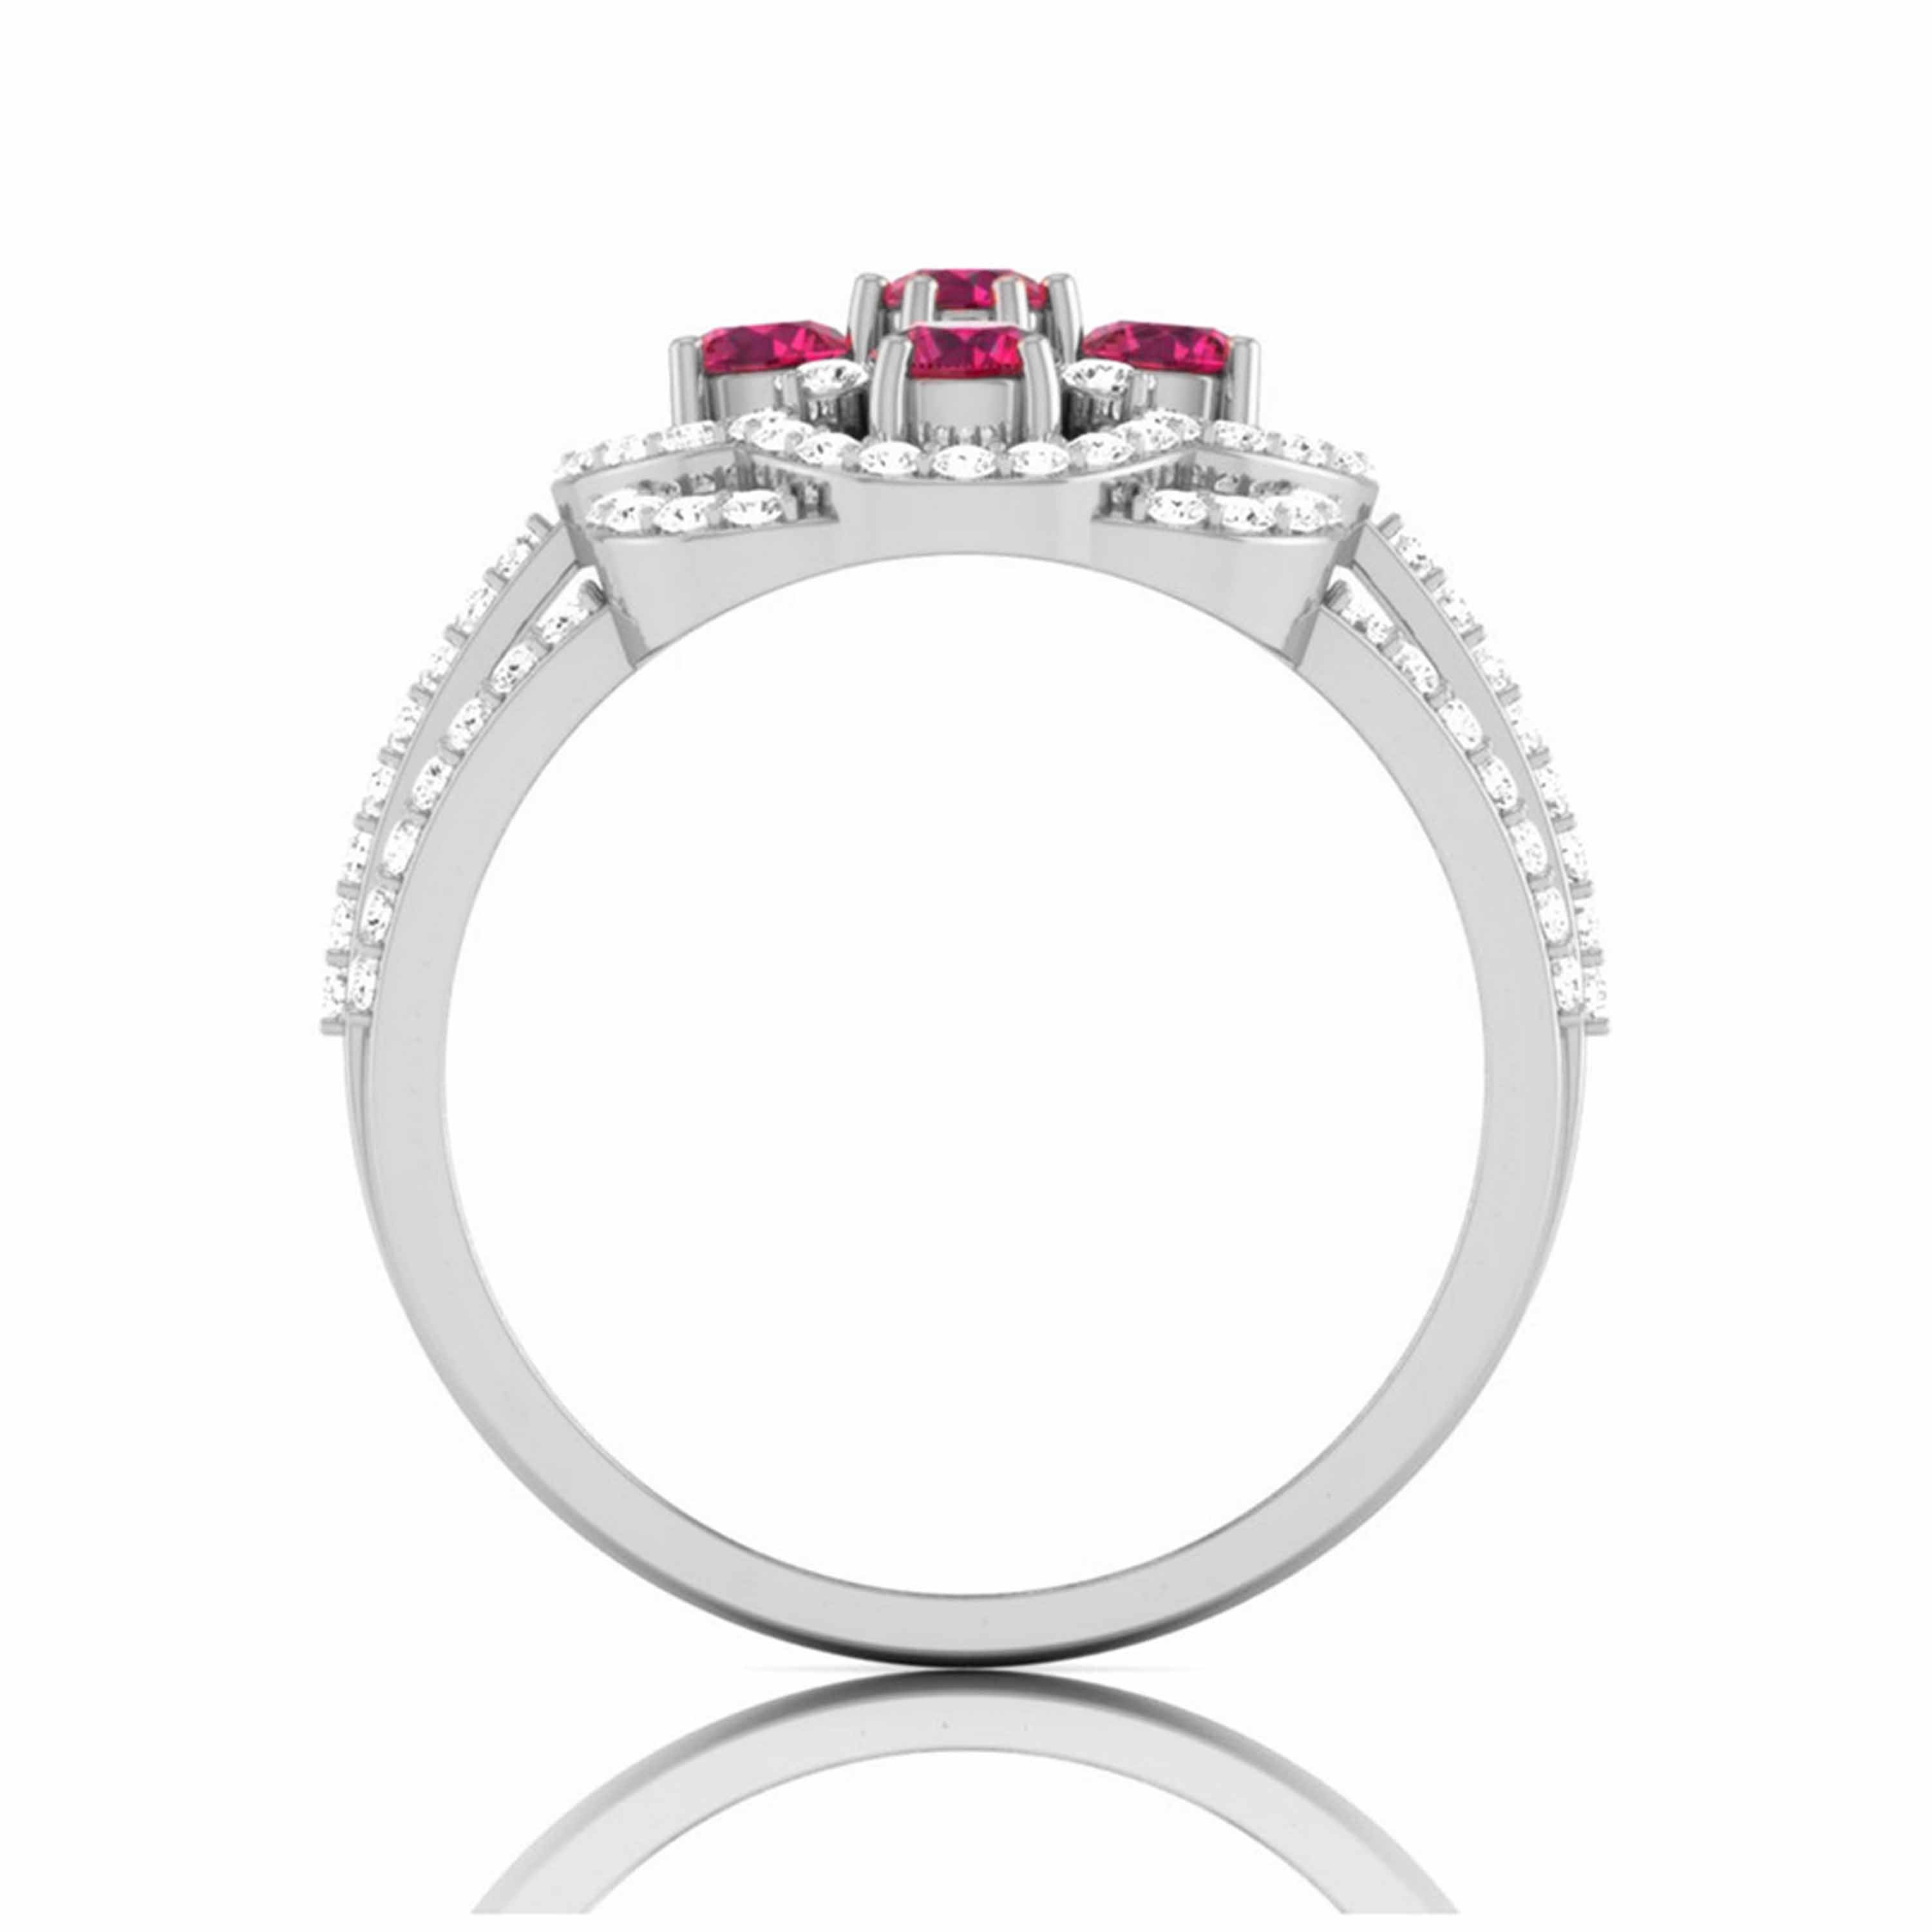 Designer Platinum Diamond Ruby Engagement Ring JL PT R8116   Jewelove